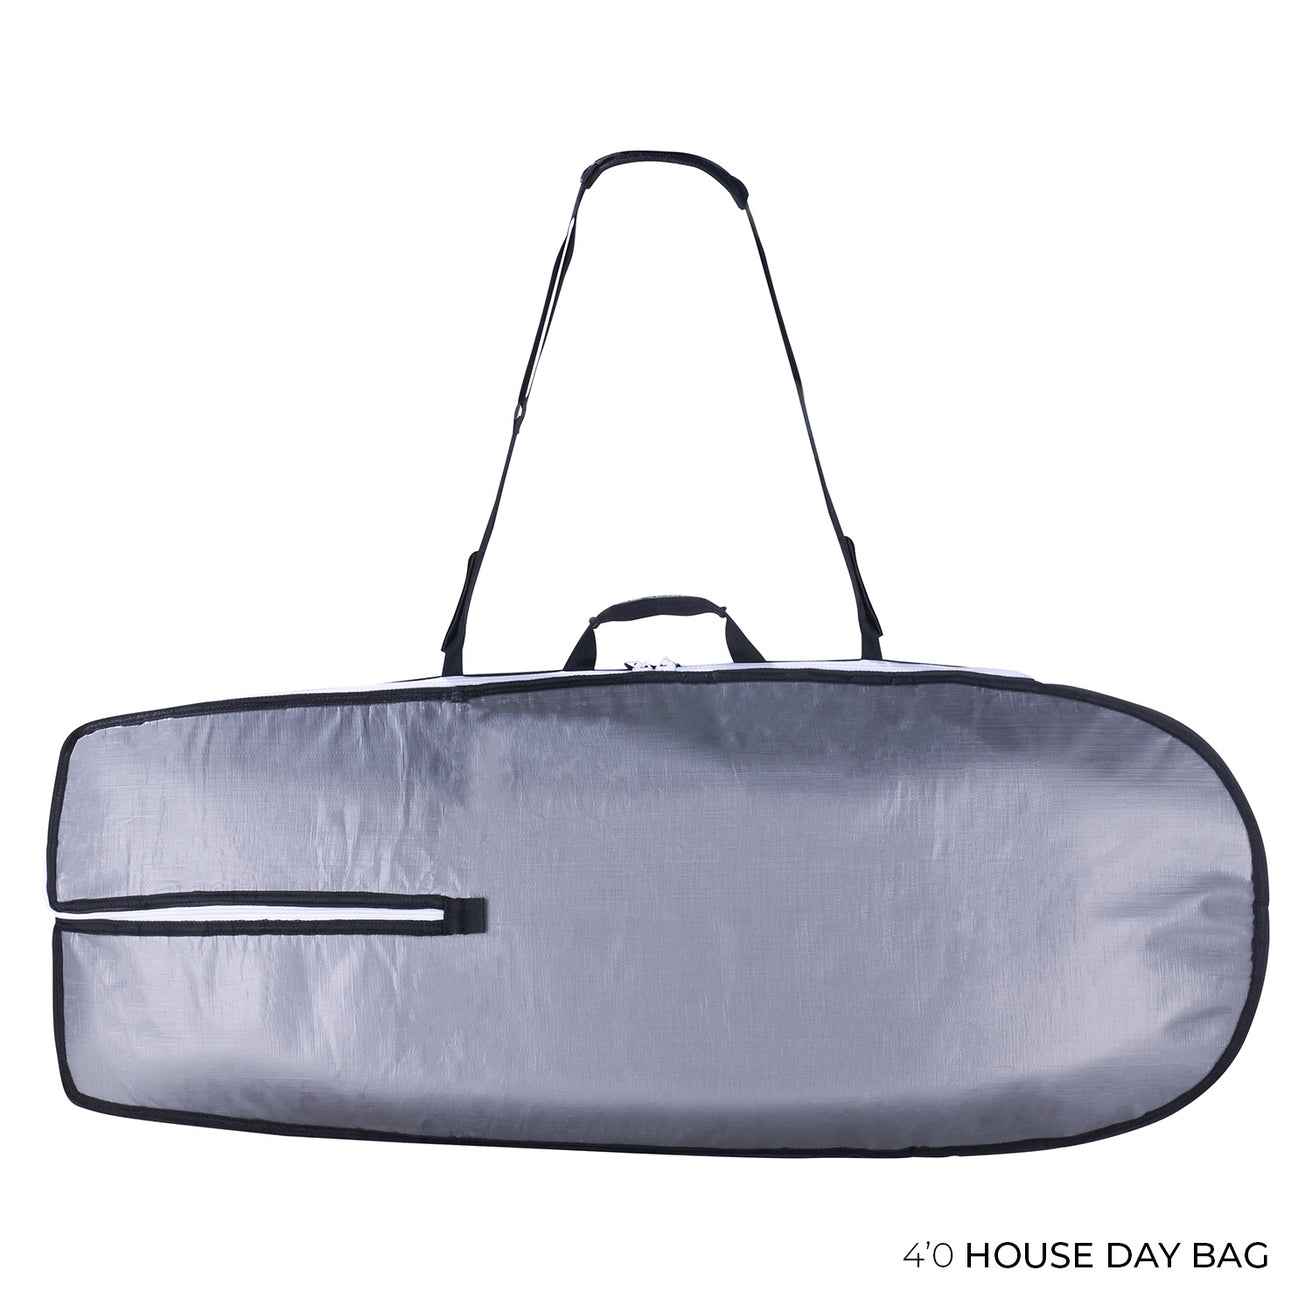 GONG | Foilboard Day Bag